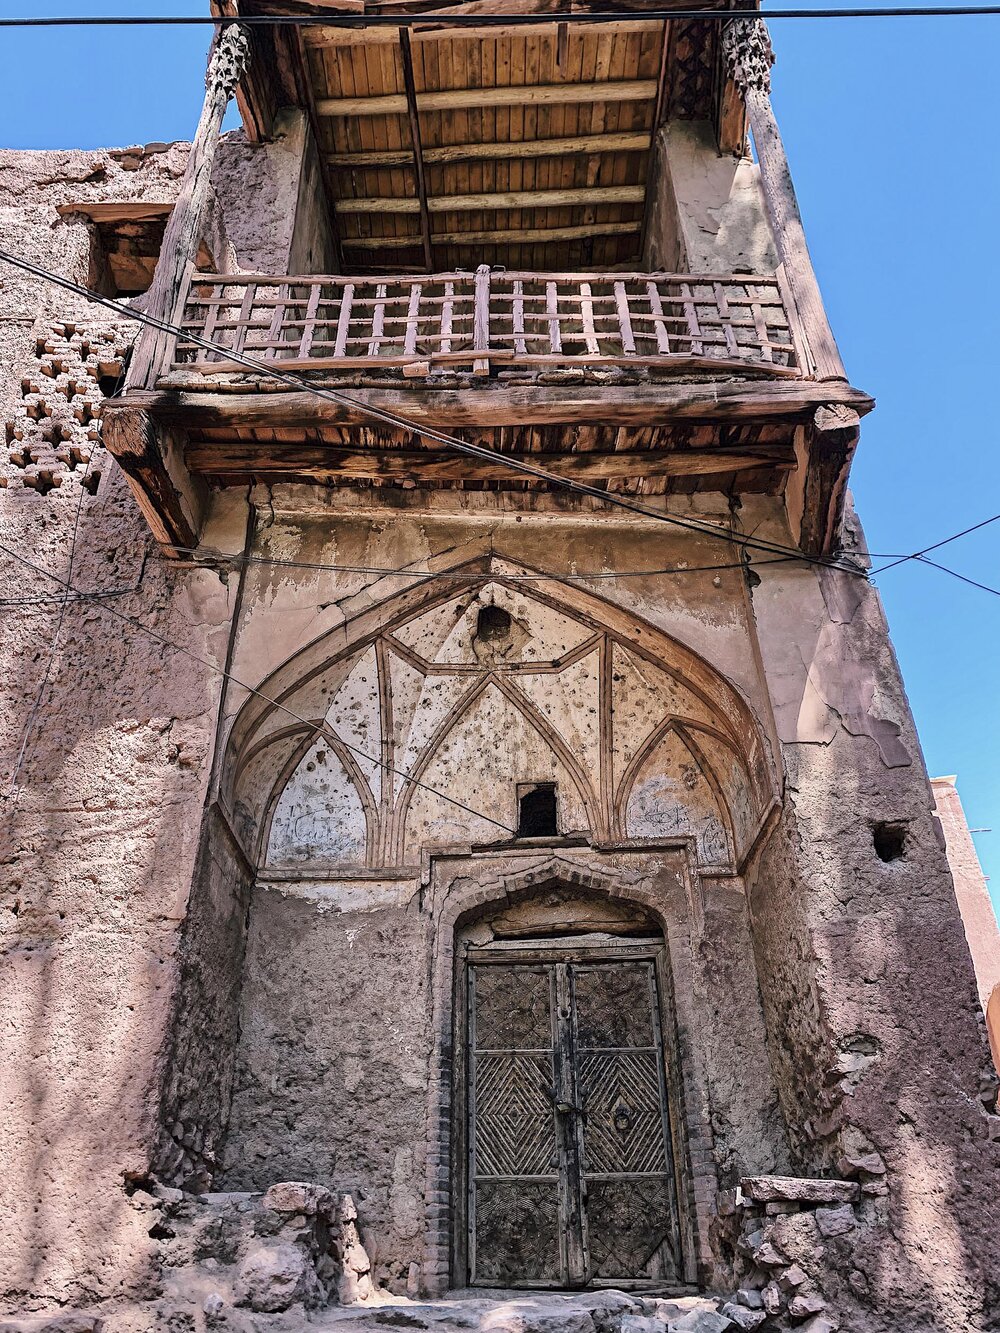 Building in Abyaneh, Iran